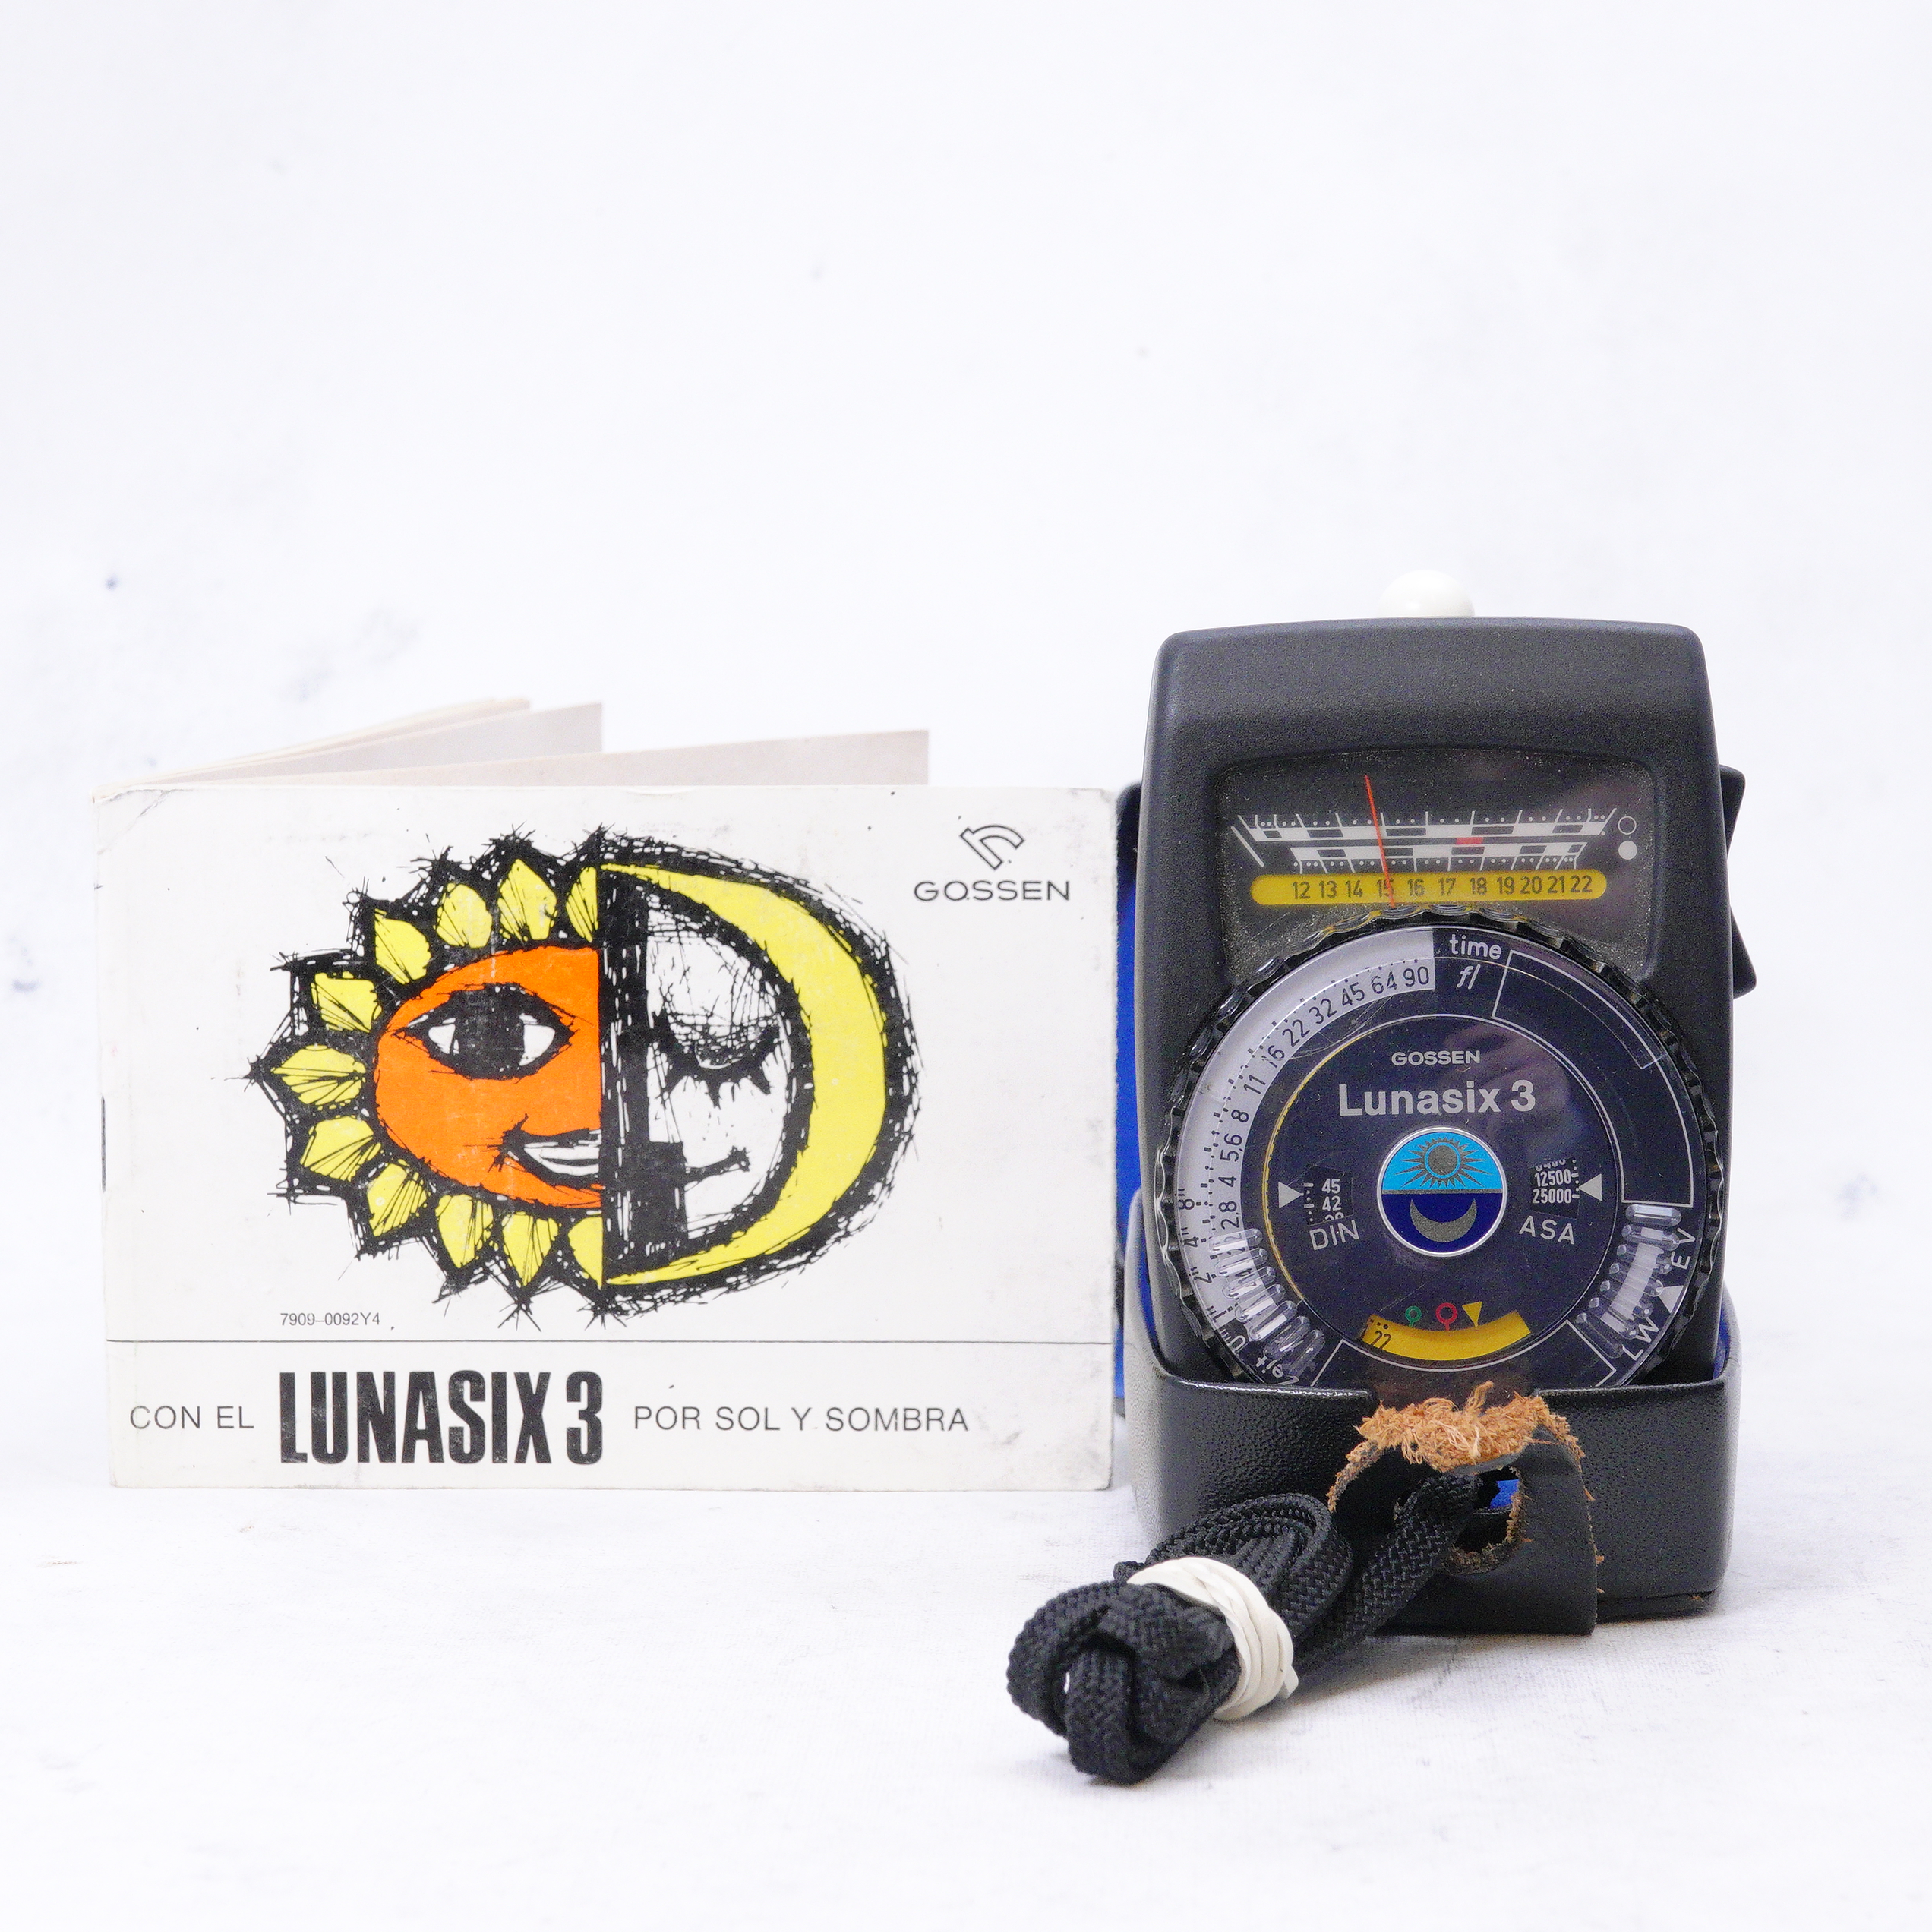 Kit Hasselblad 500 cm con lente 80mm 40mm 2 backs y extras - Usado